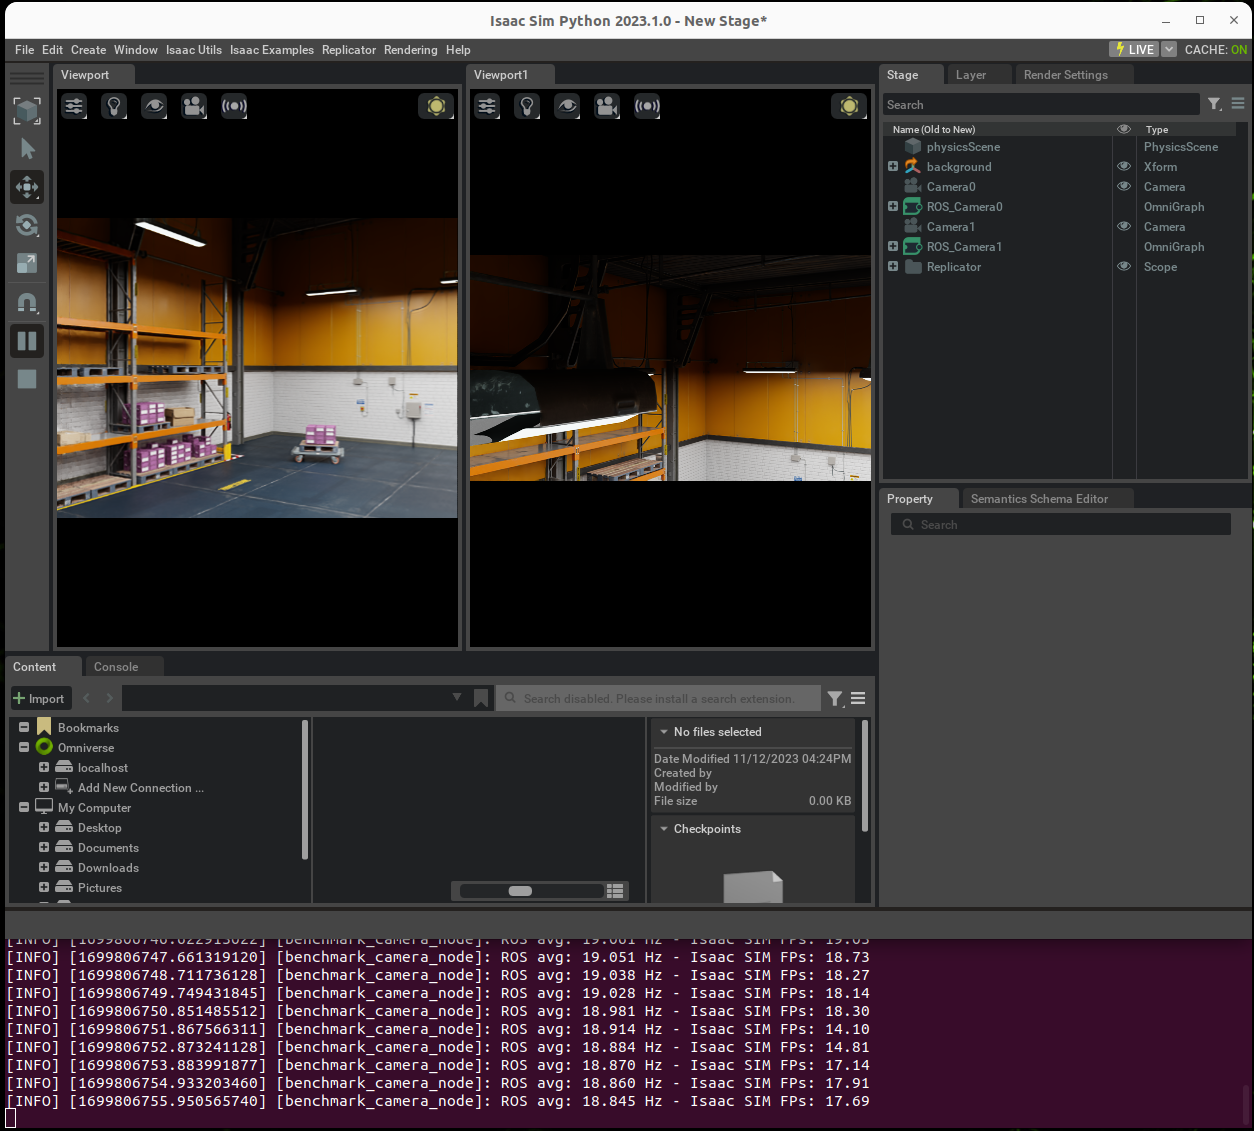 A screenshot of an example camera output from Isaac Sim.